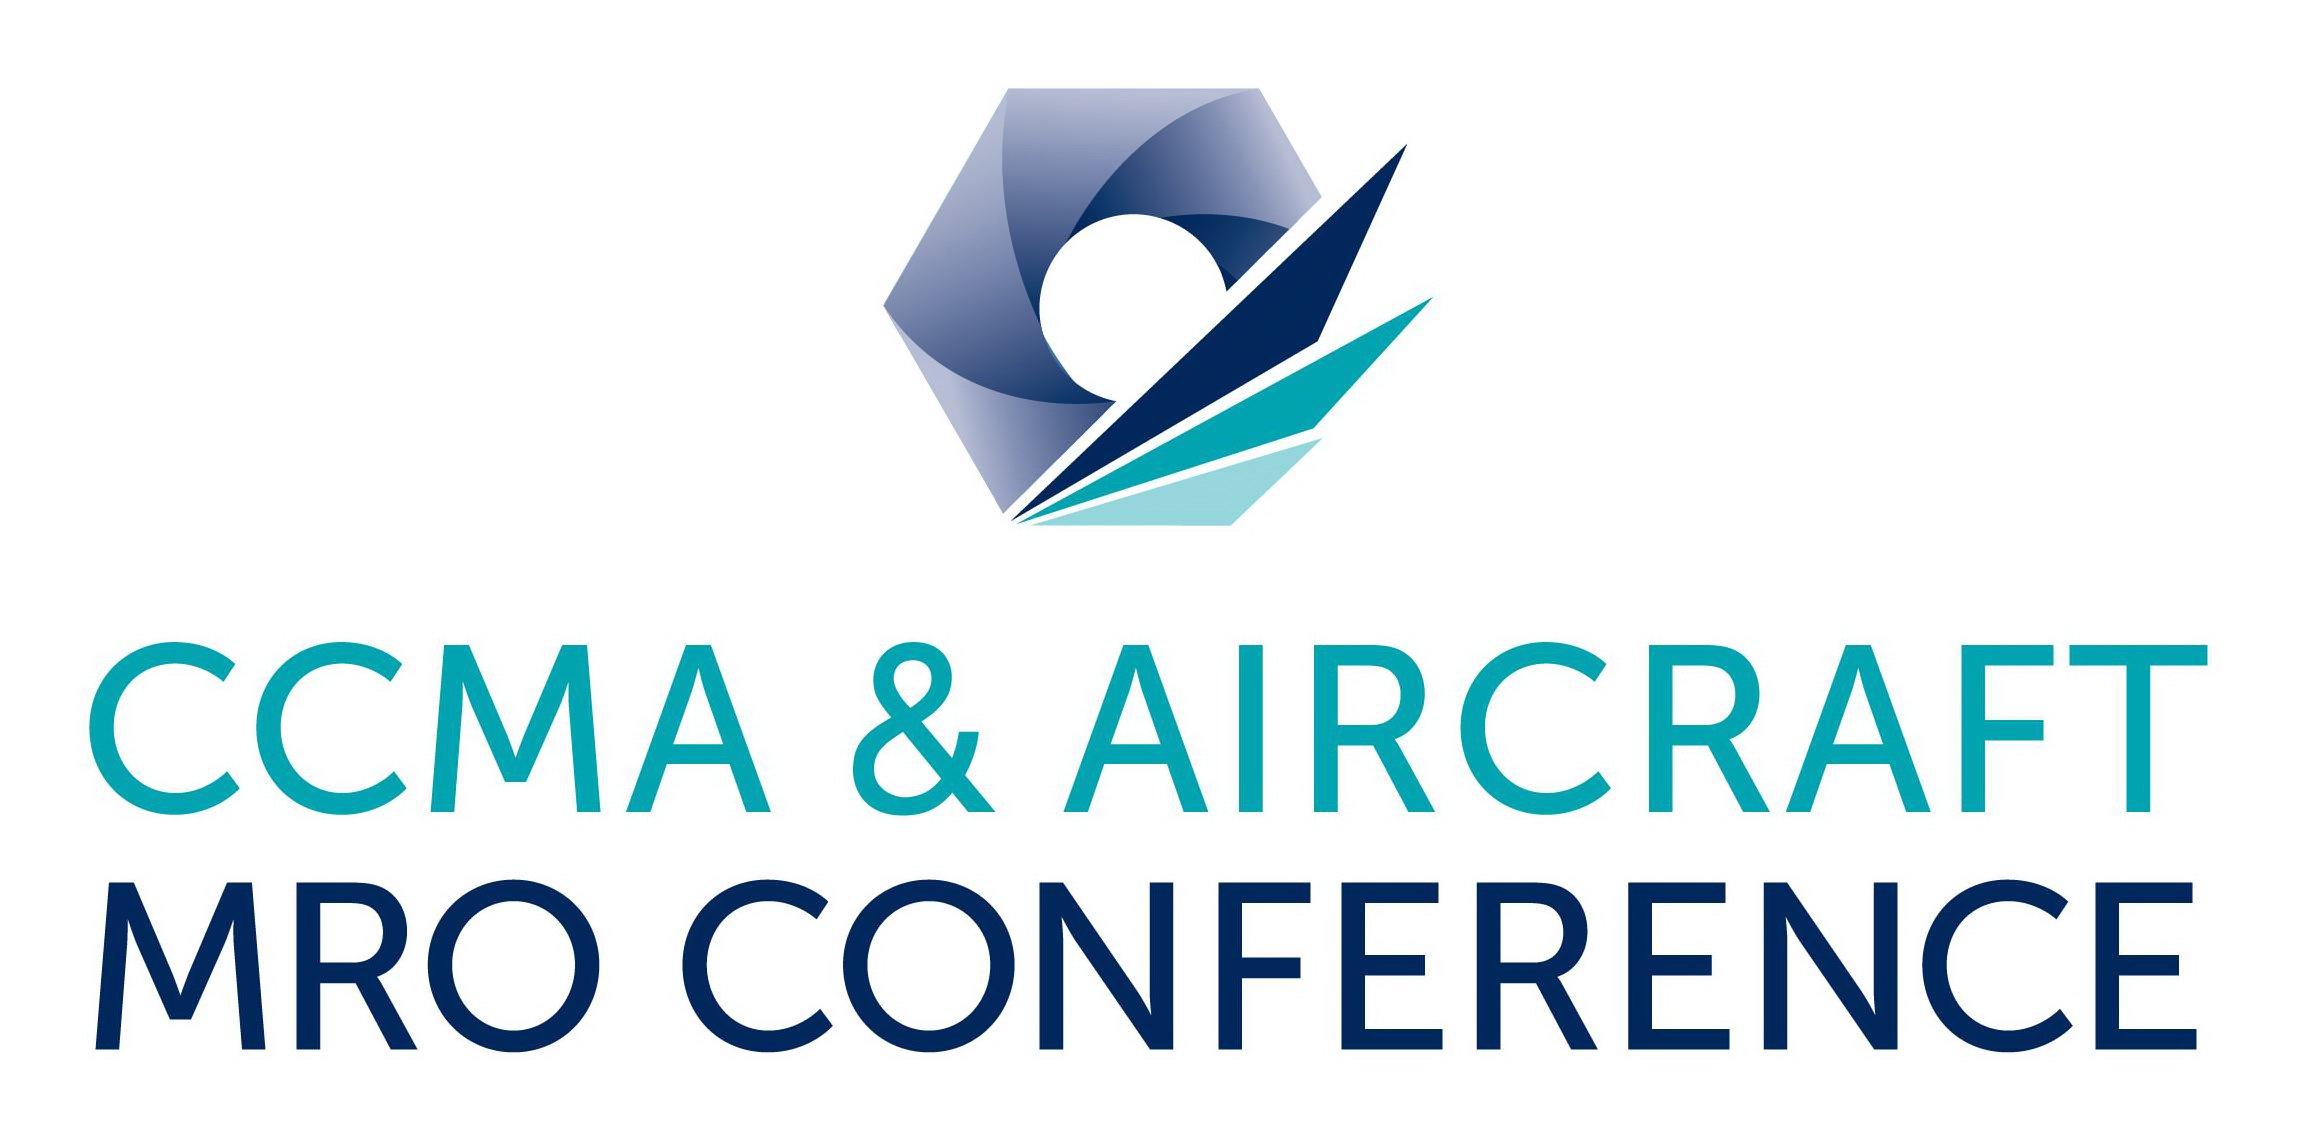  CCMA &amp; AIRCRAFT MRO CONFERENCE